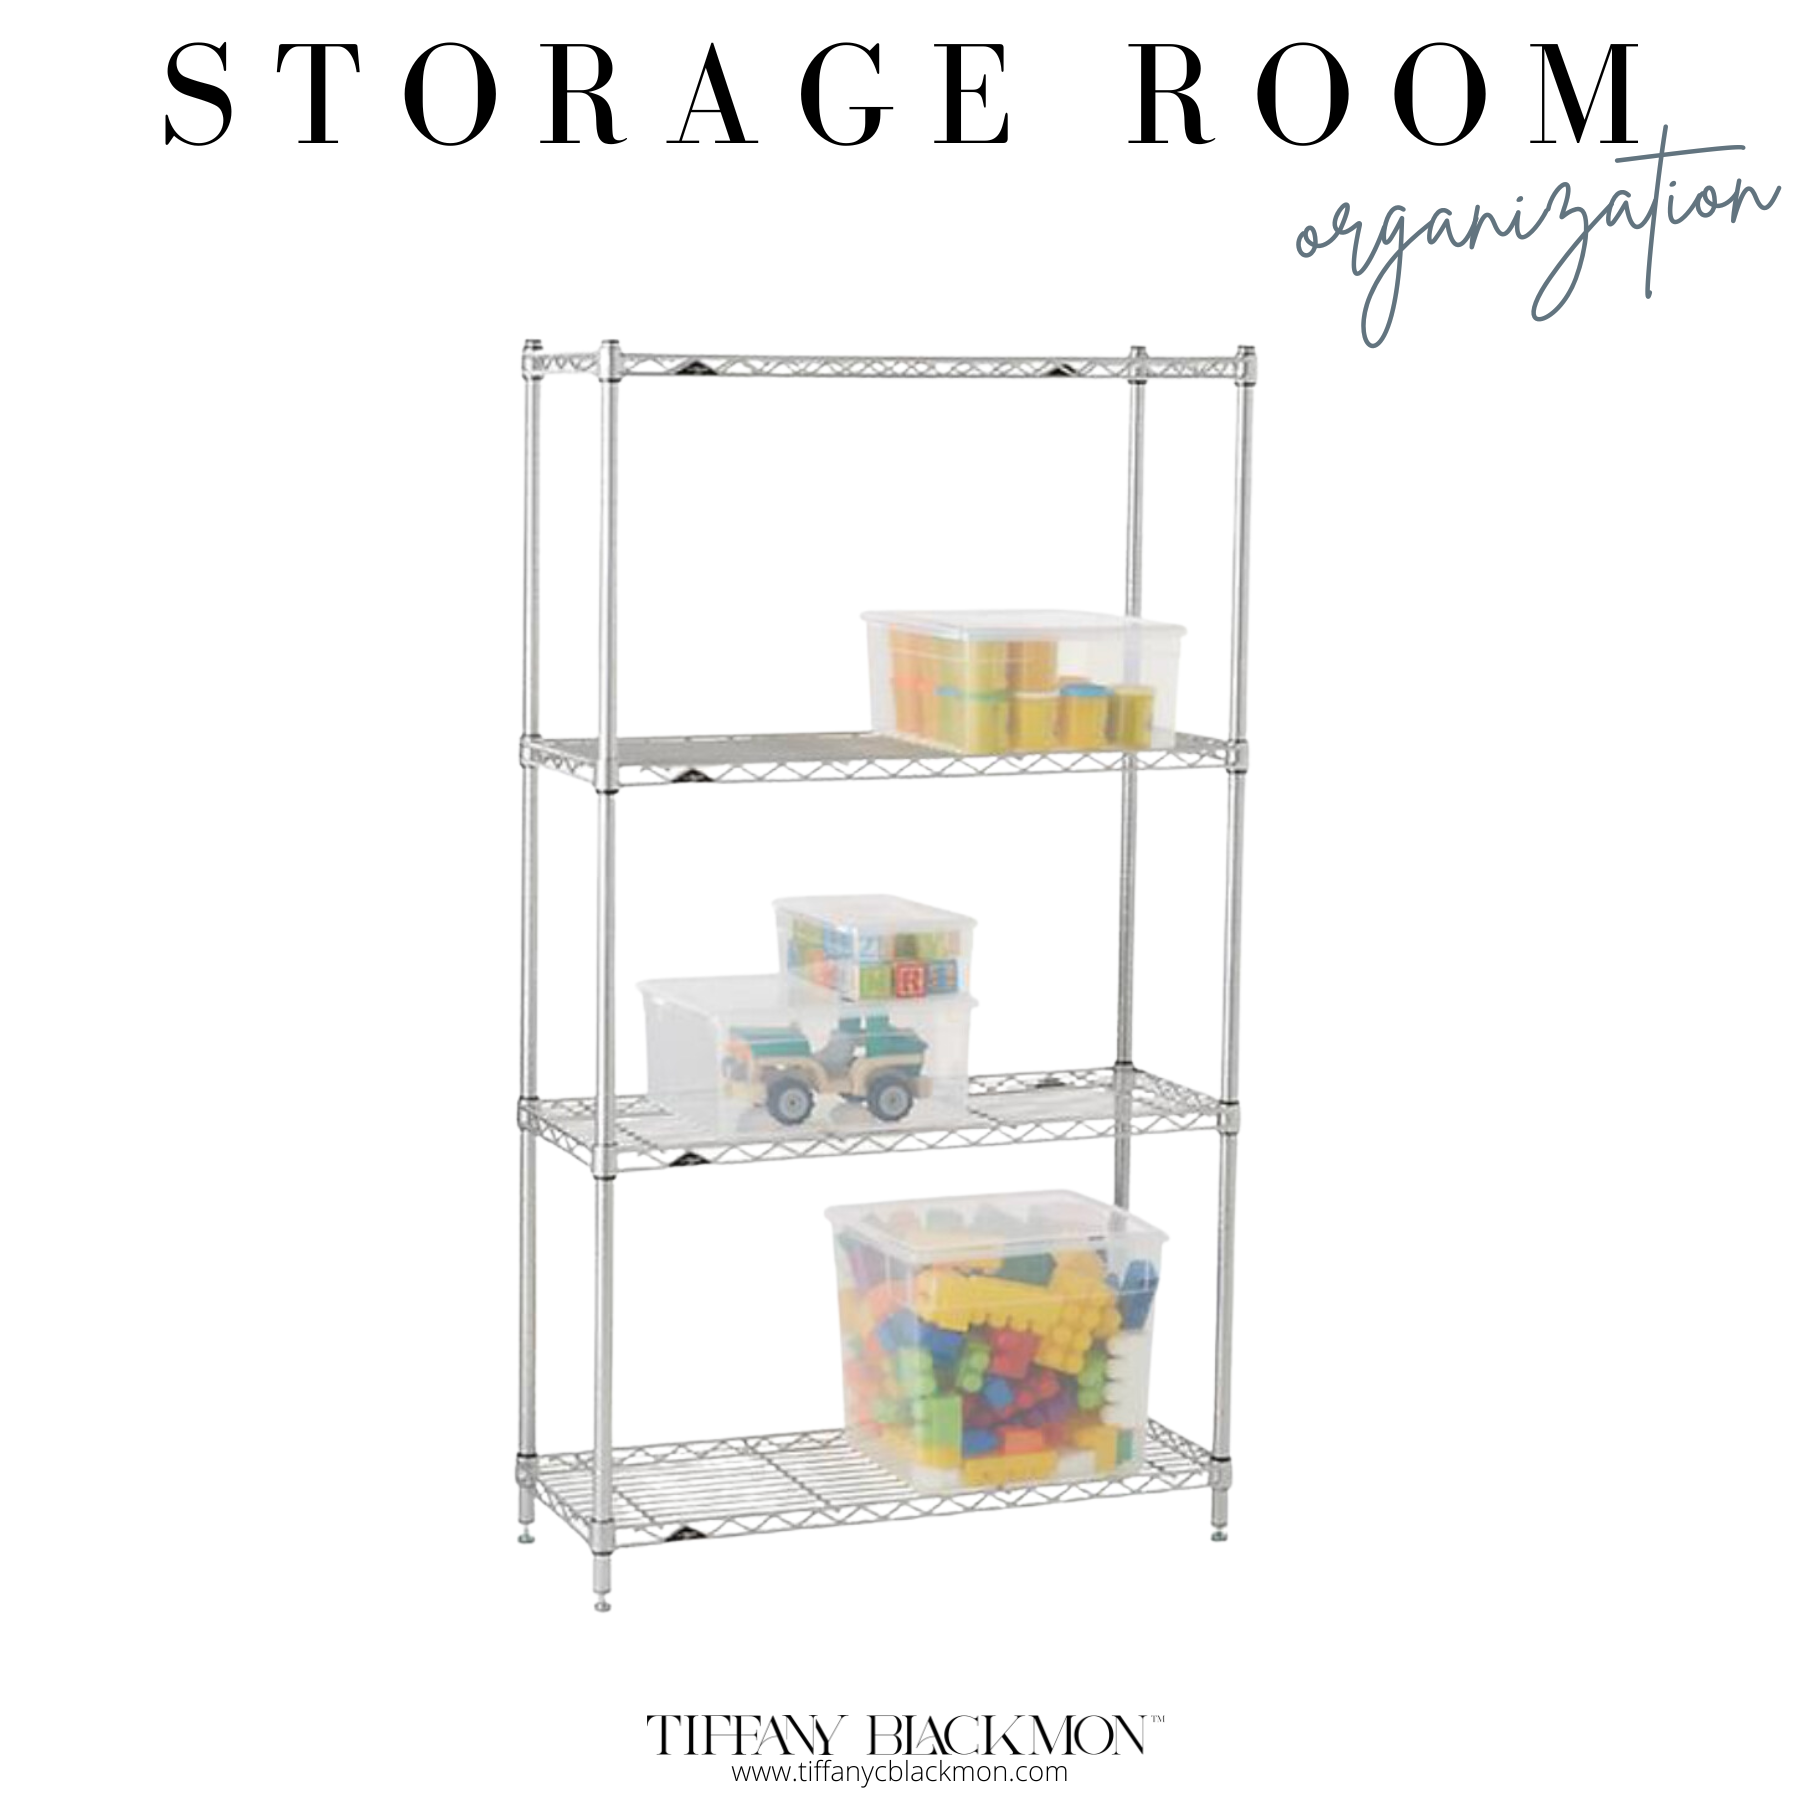 Storage Room Organization: How to Best Utilize Your Space!
#storage #organization #declutter #storageroom #organize